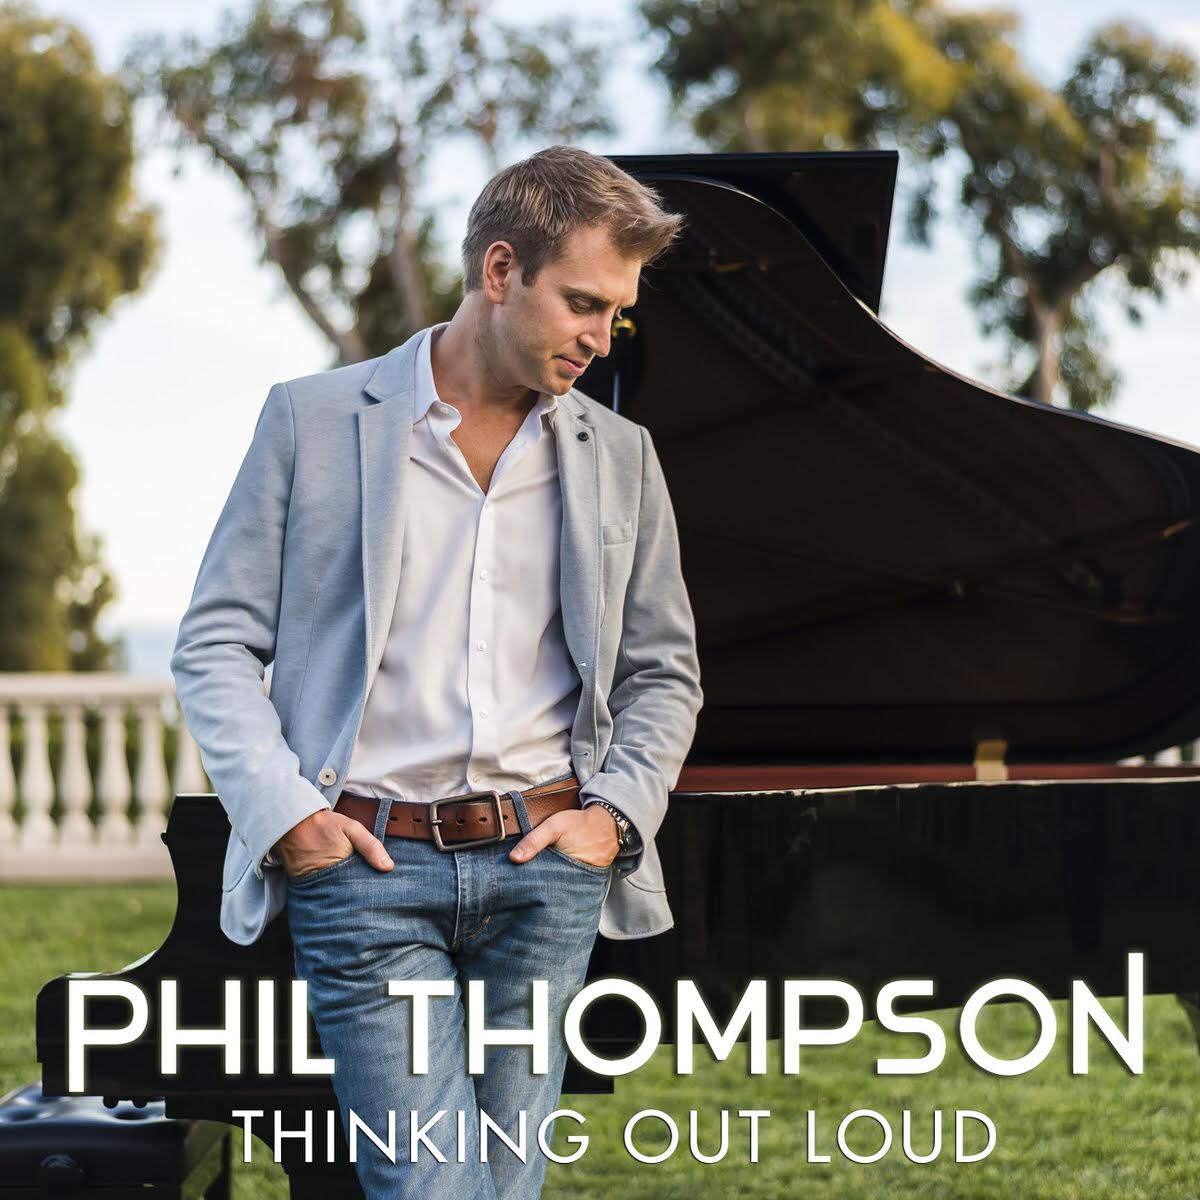 Phil Thompson at Grand Piano in Malibu at Villa Sancti performing romantic arrangement of Thinking Out Loud by Ed Sheeran